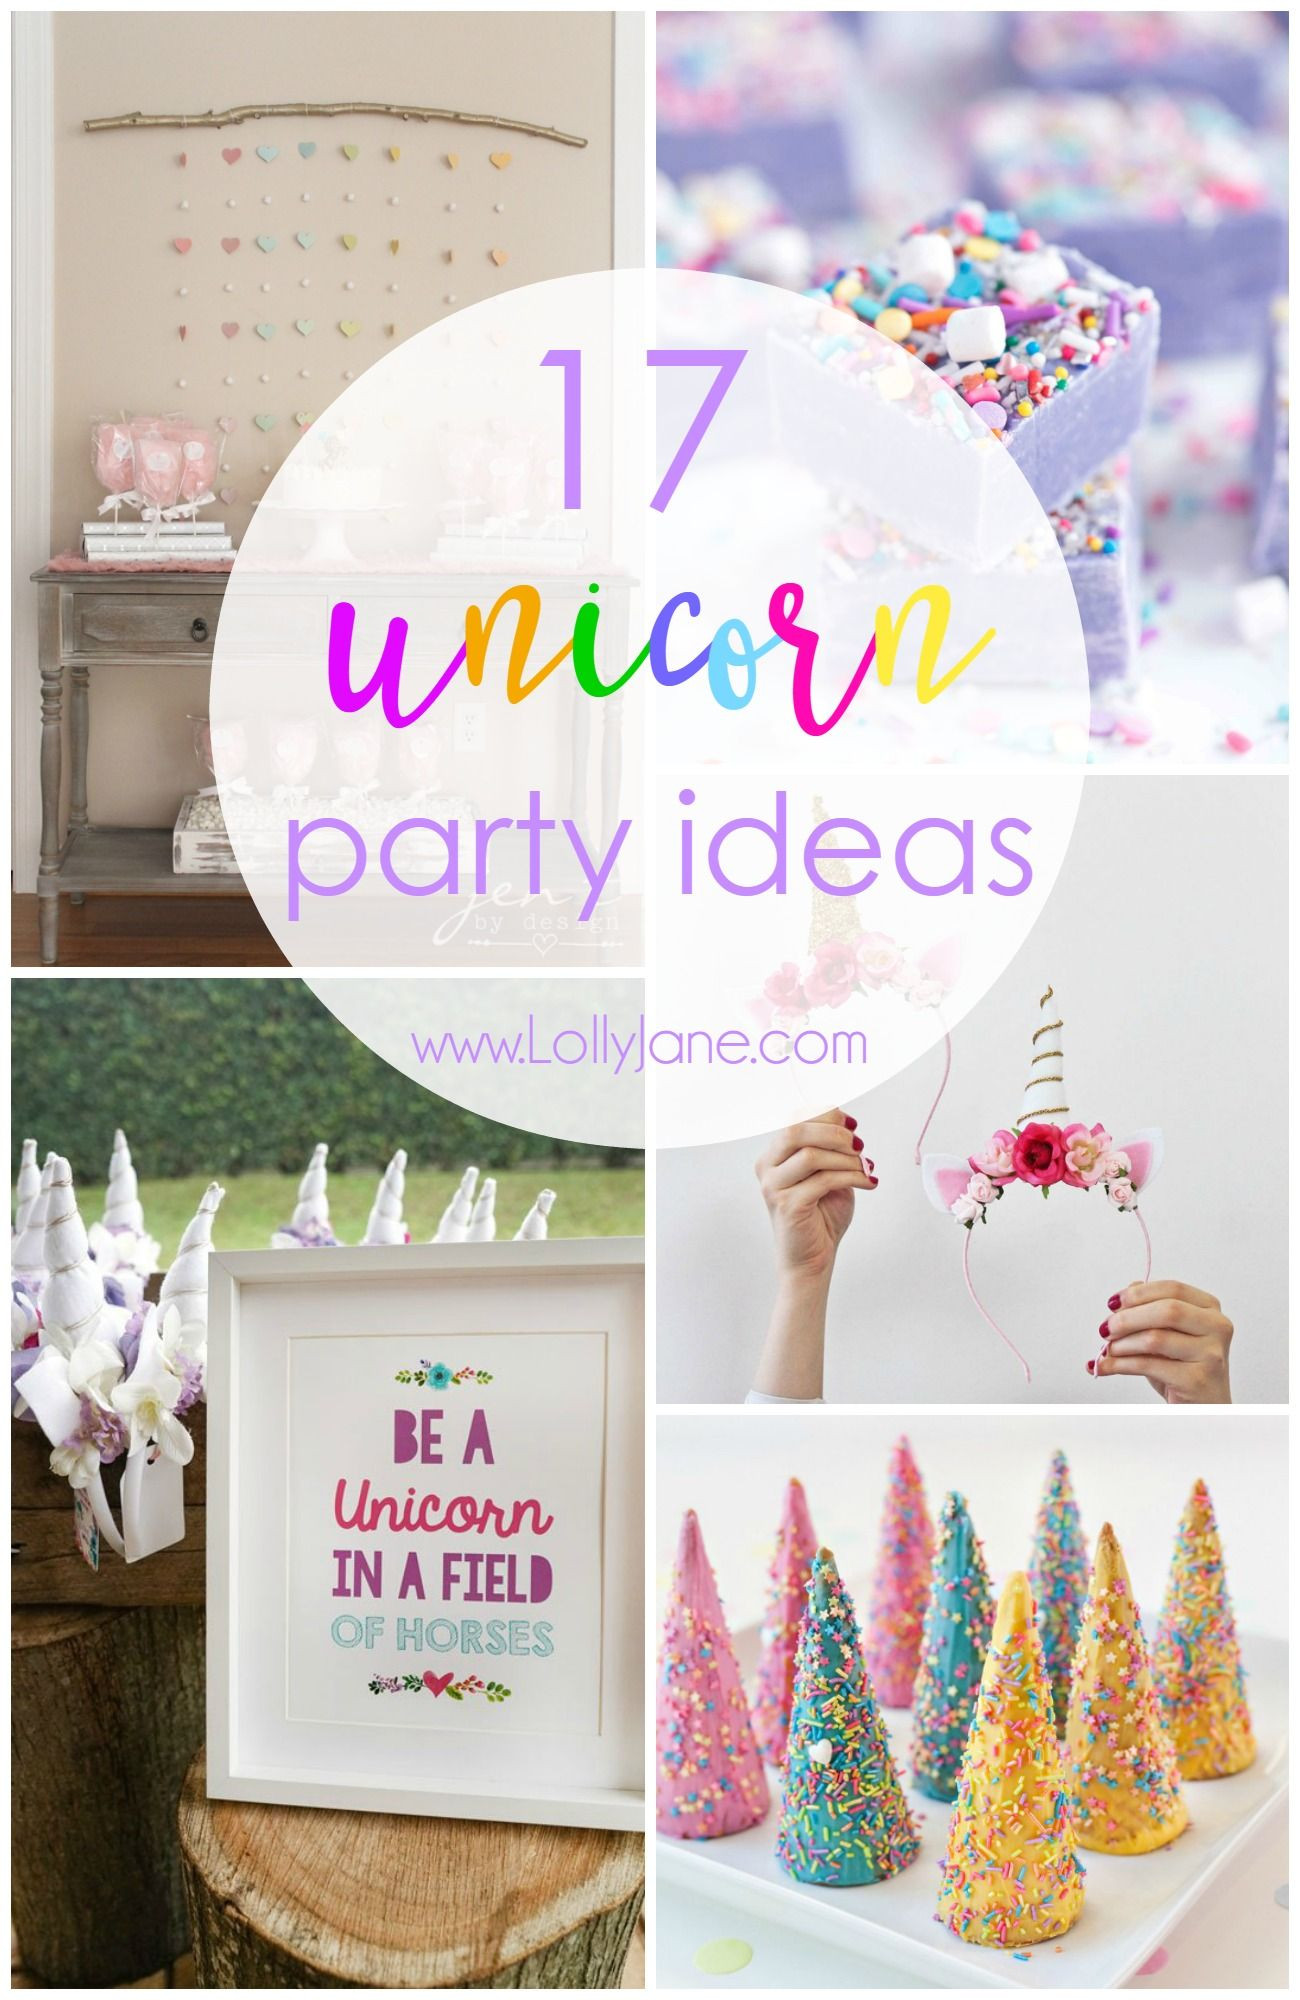 Rainbow Unicorn Party Ideas
 17 Unicorn Party Ideas To Throw The Ultimate Unicorn Party